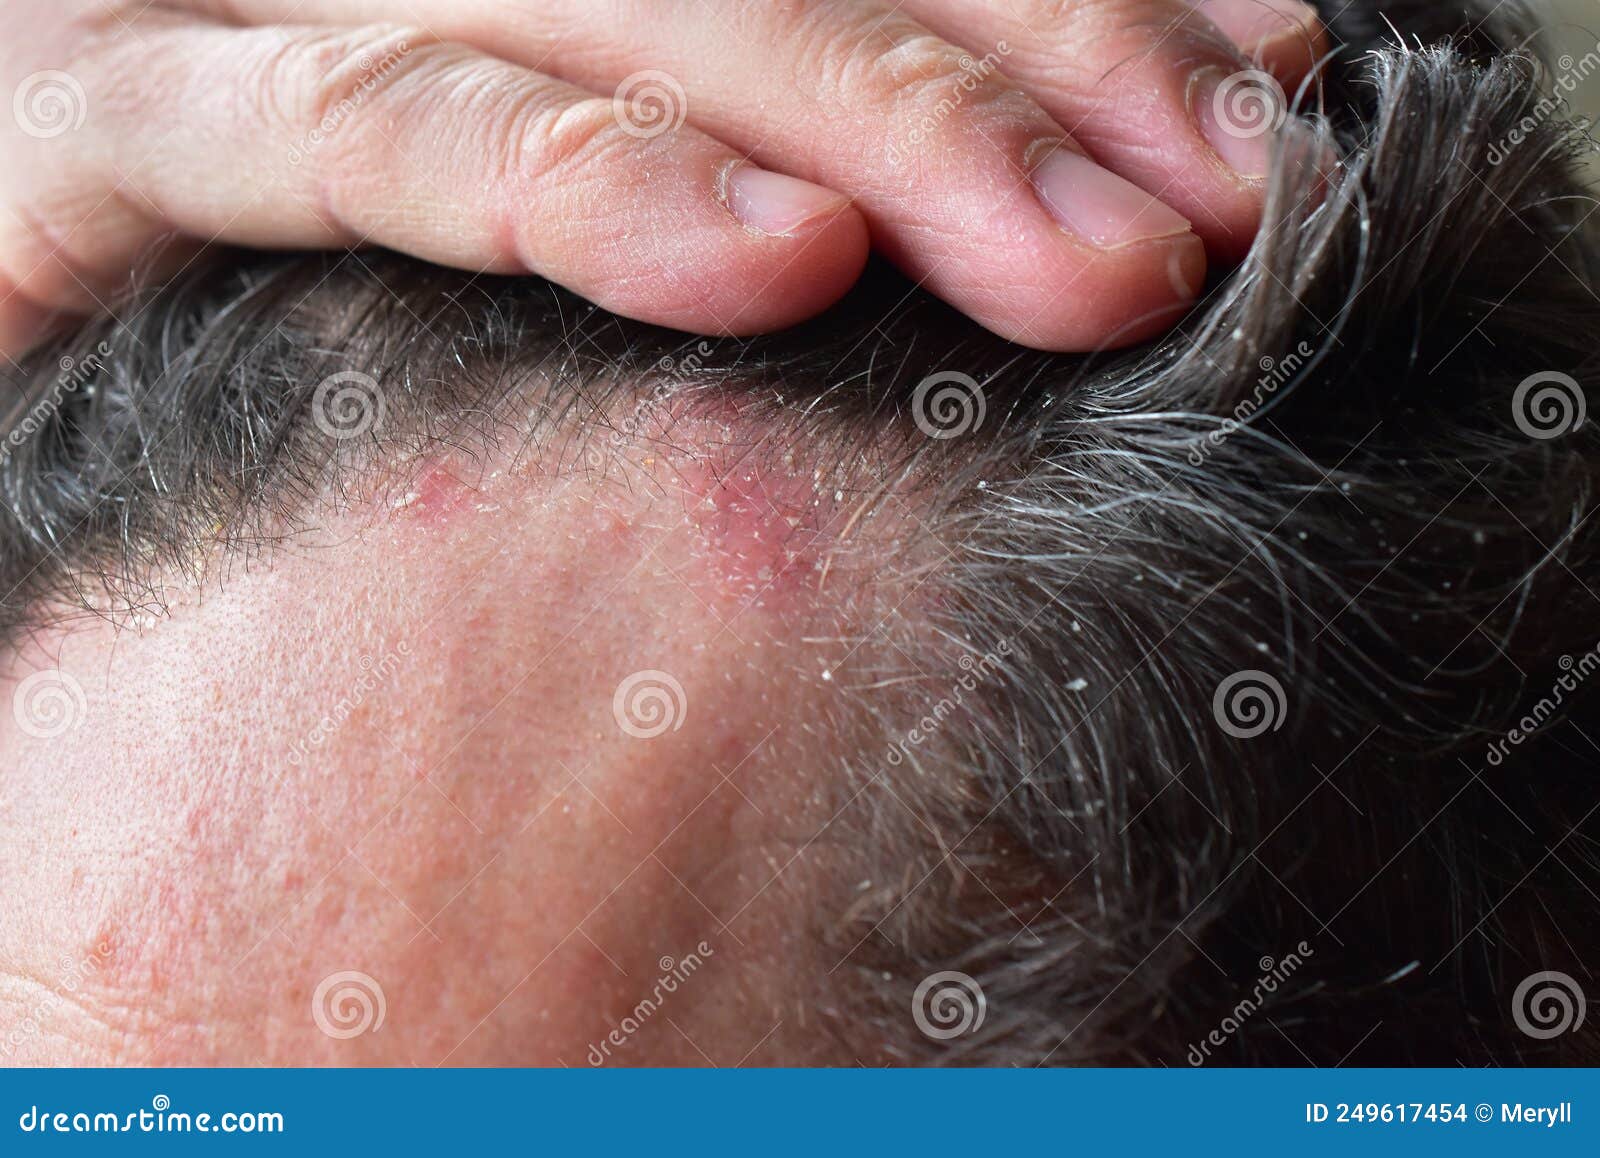 seborrhea dermatitis hair dandruff